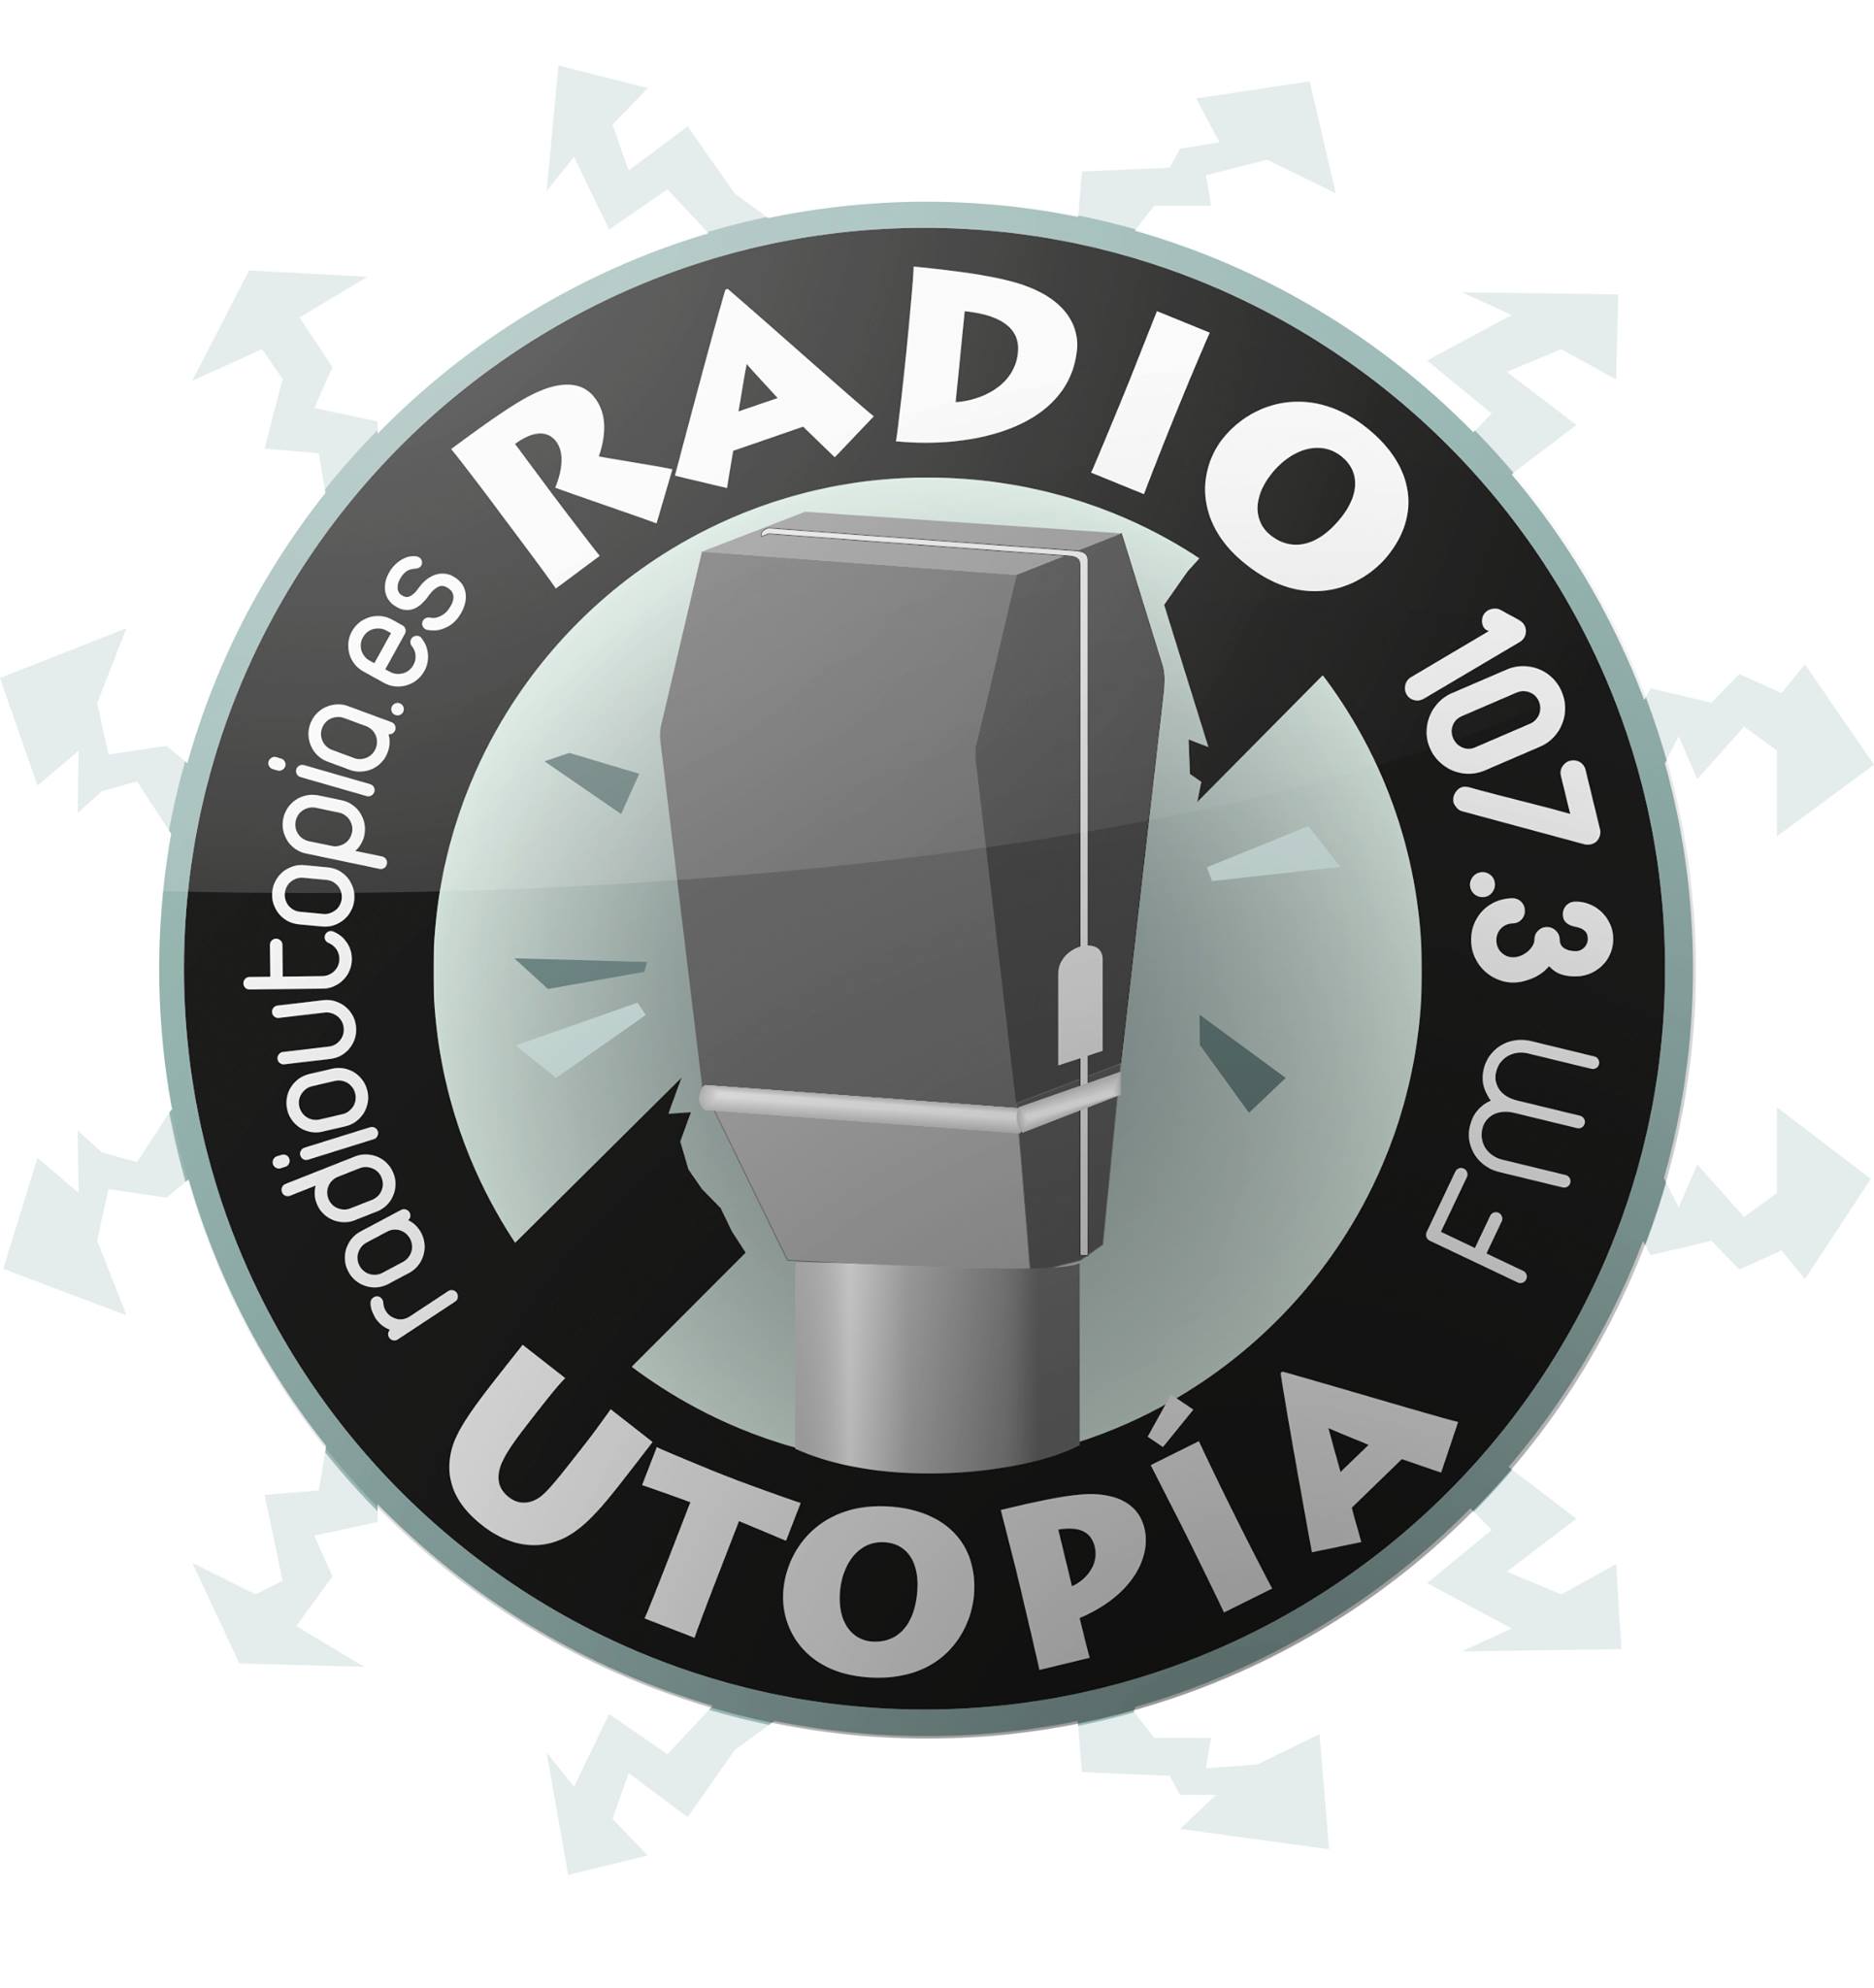 Radio Utopía